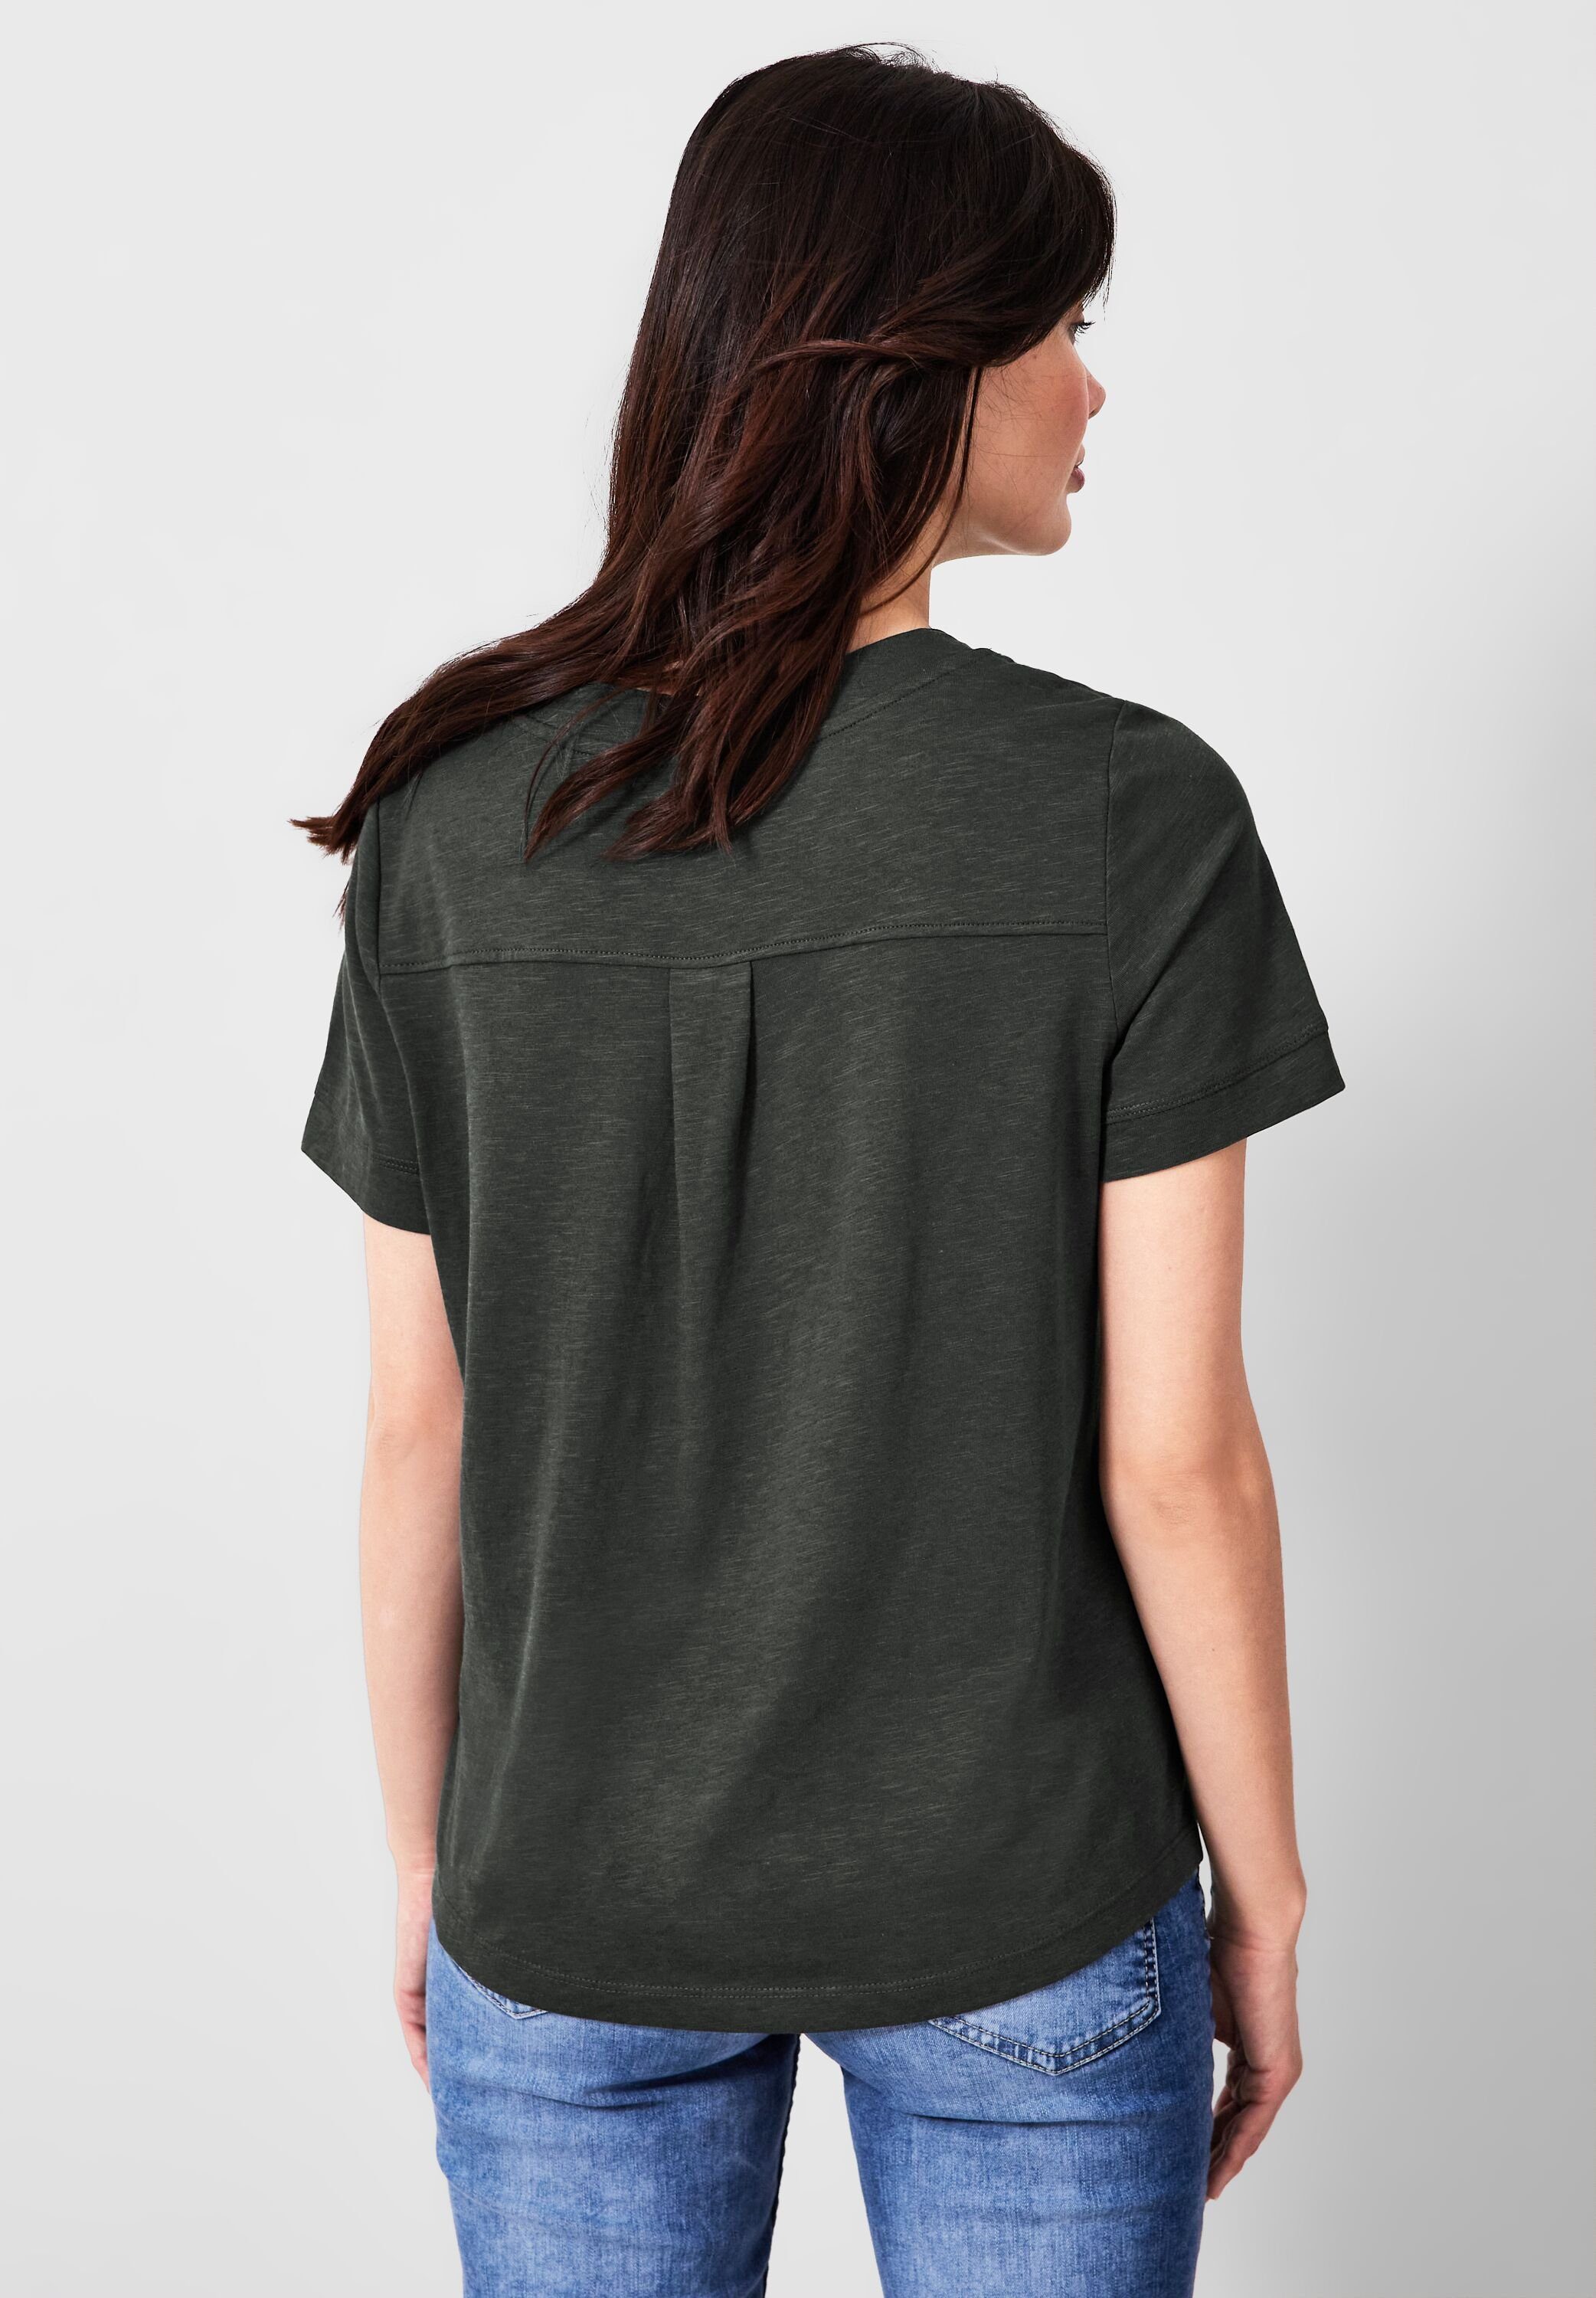 Cecil T-Shirt in Unifarbe khaki easy